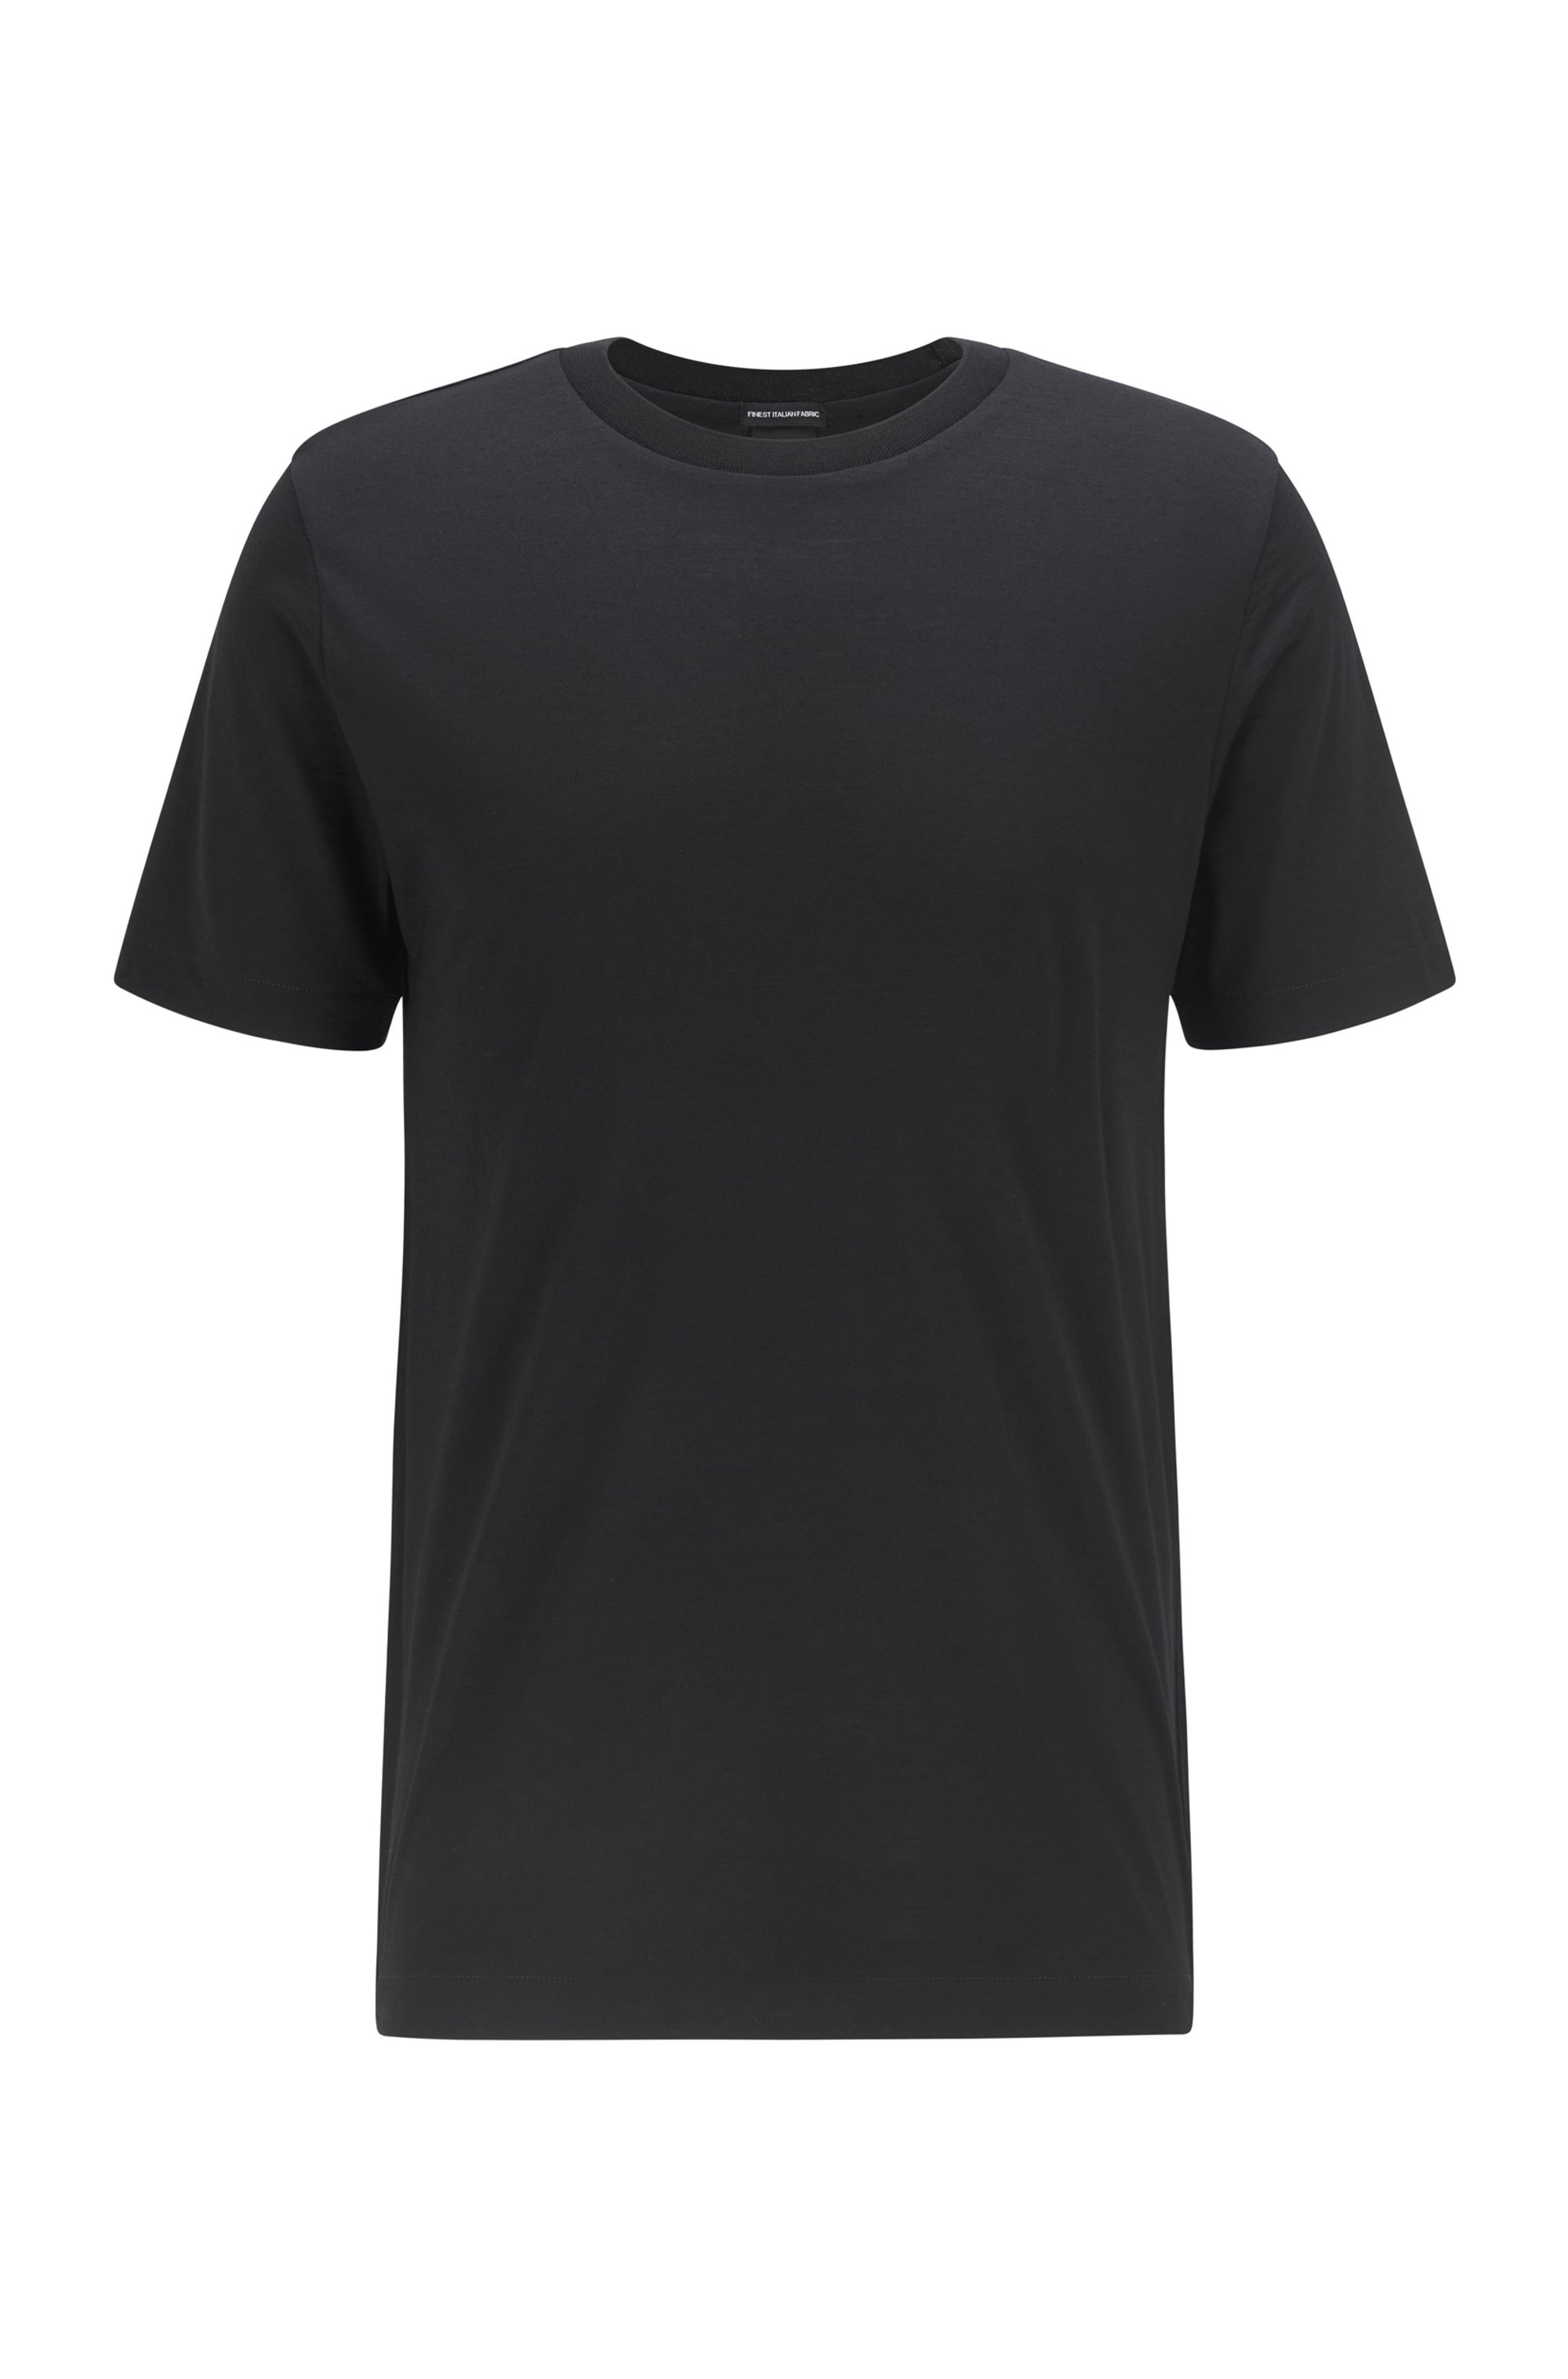 Crew-neck T-shirt in traceable Italian virgin wool, Black